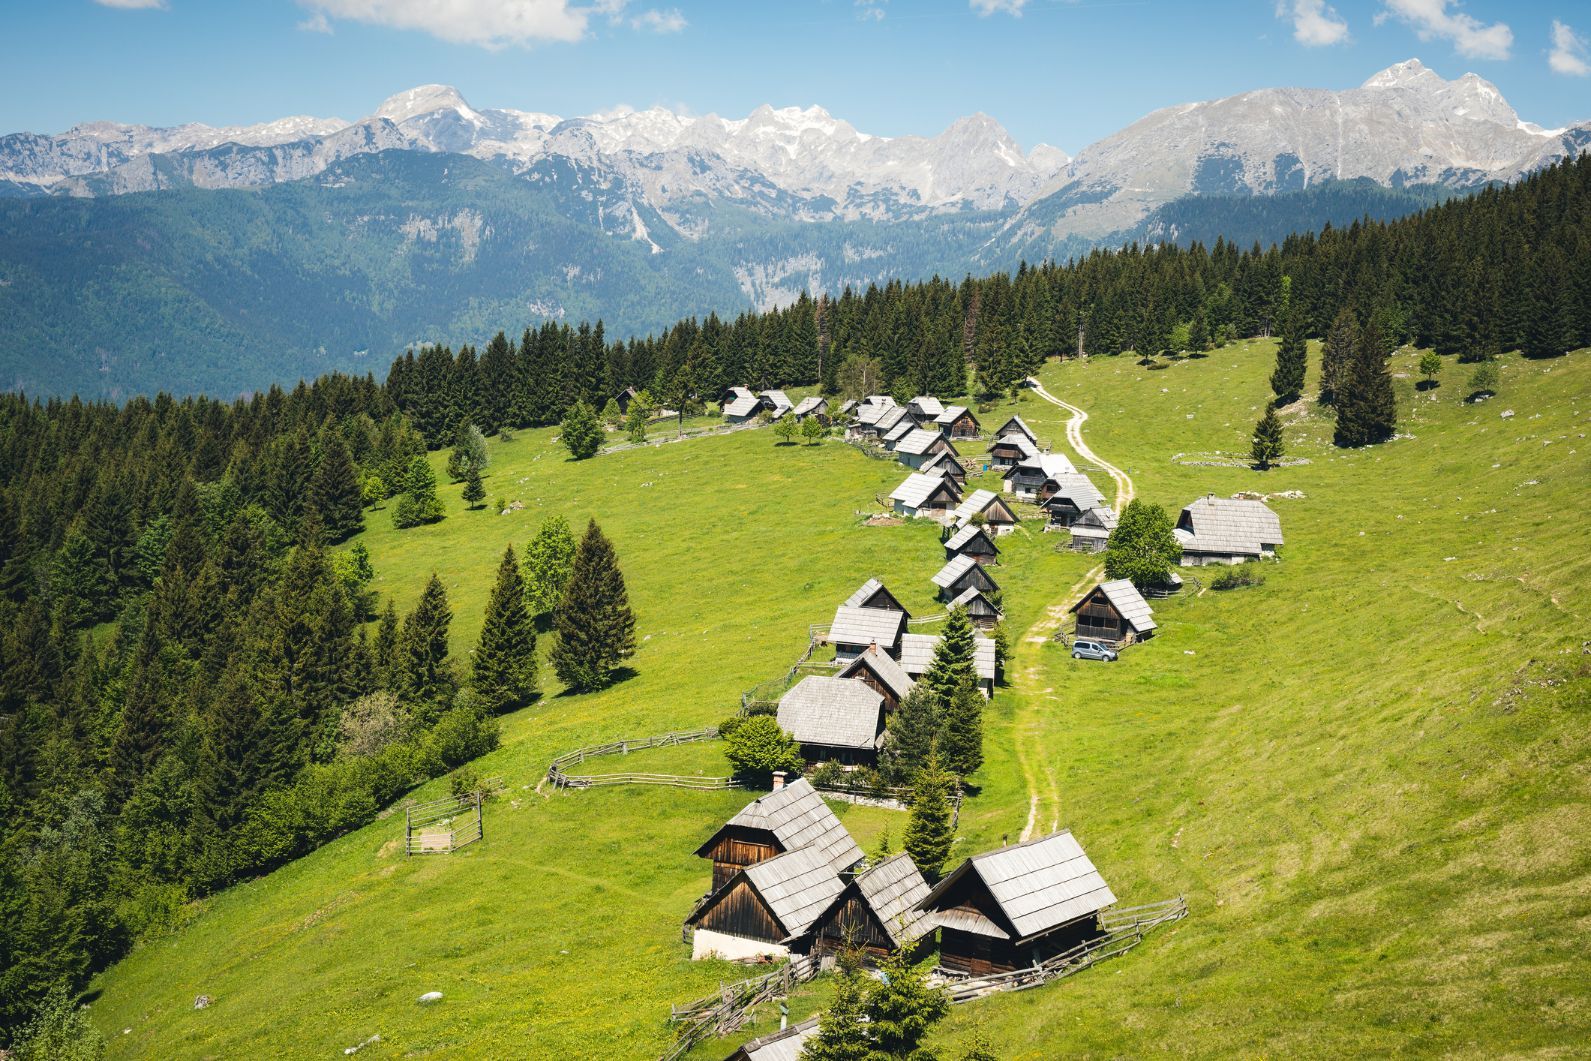 The idyllic alpine village on Planina Zajamniki (Pokljuka plateau), one of the fastest routes to the top of Triglav